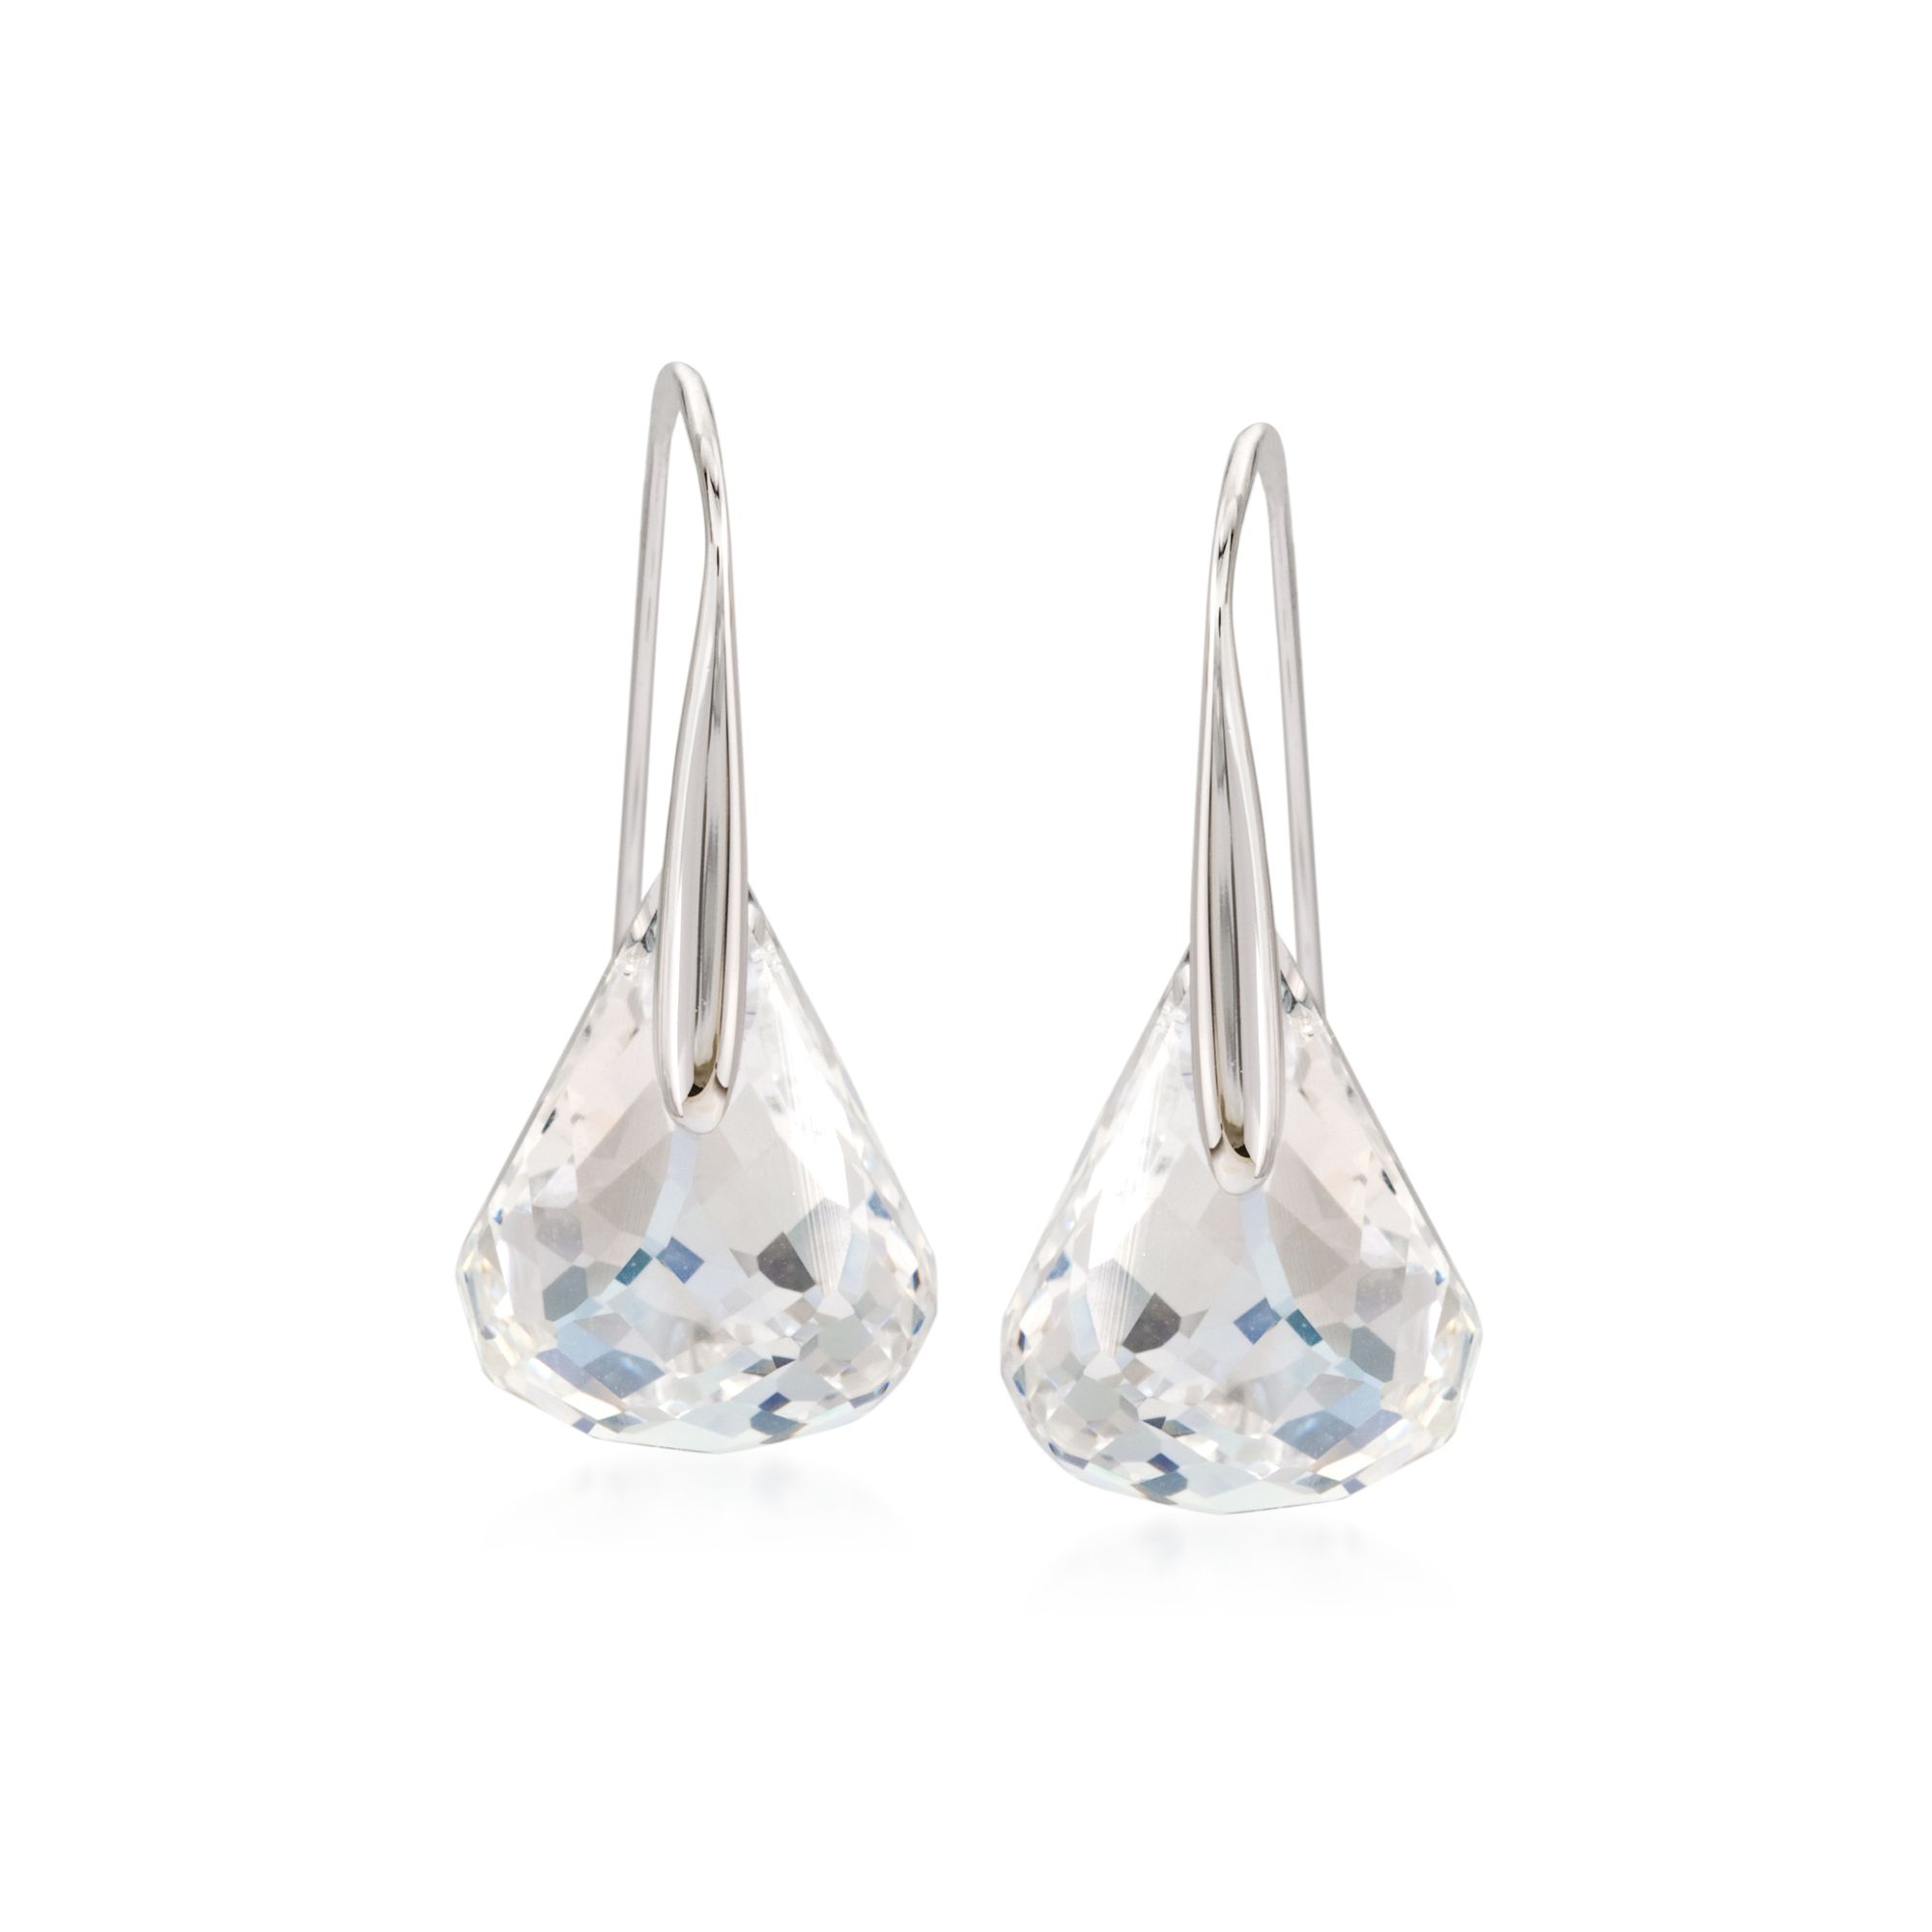 Swarovski Crystal "Lunar" Moonlight Crystal Drop Earrings in Silvertone |  Ross-Simons